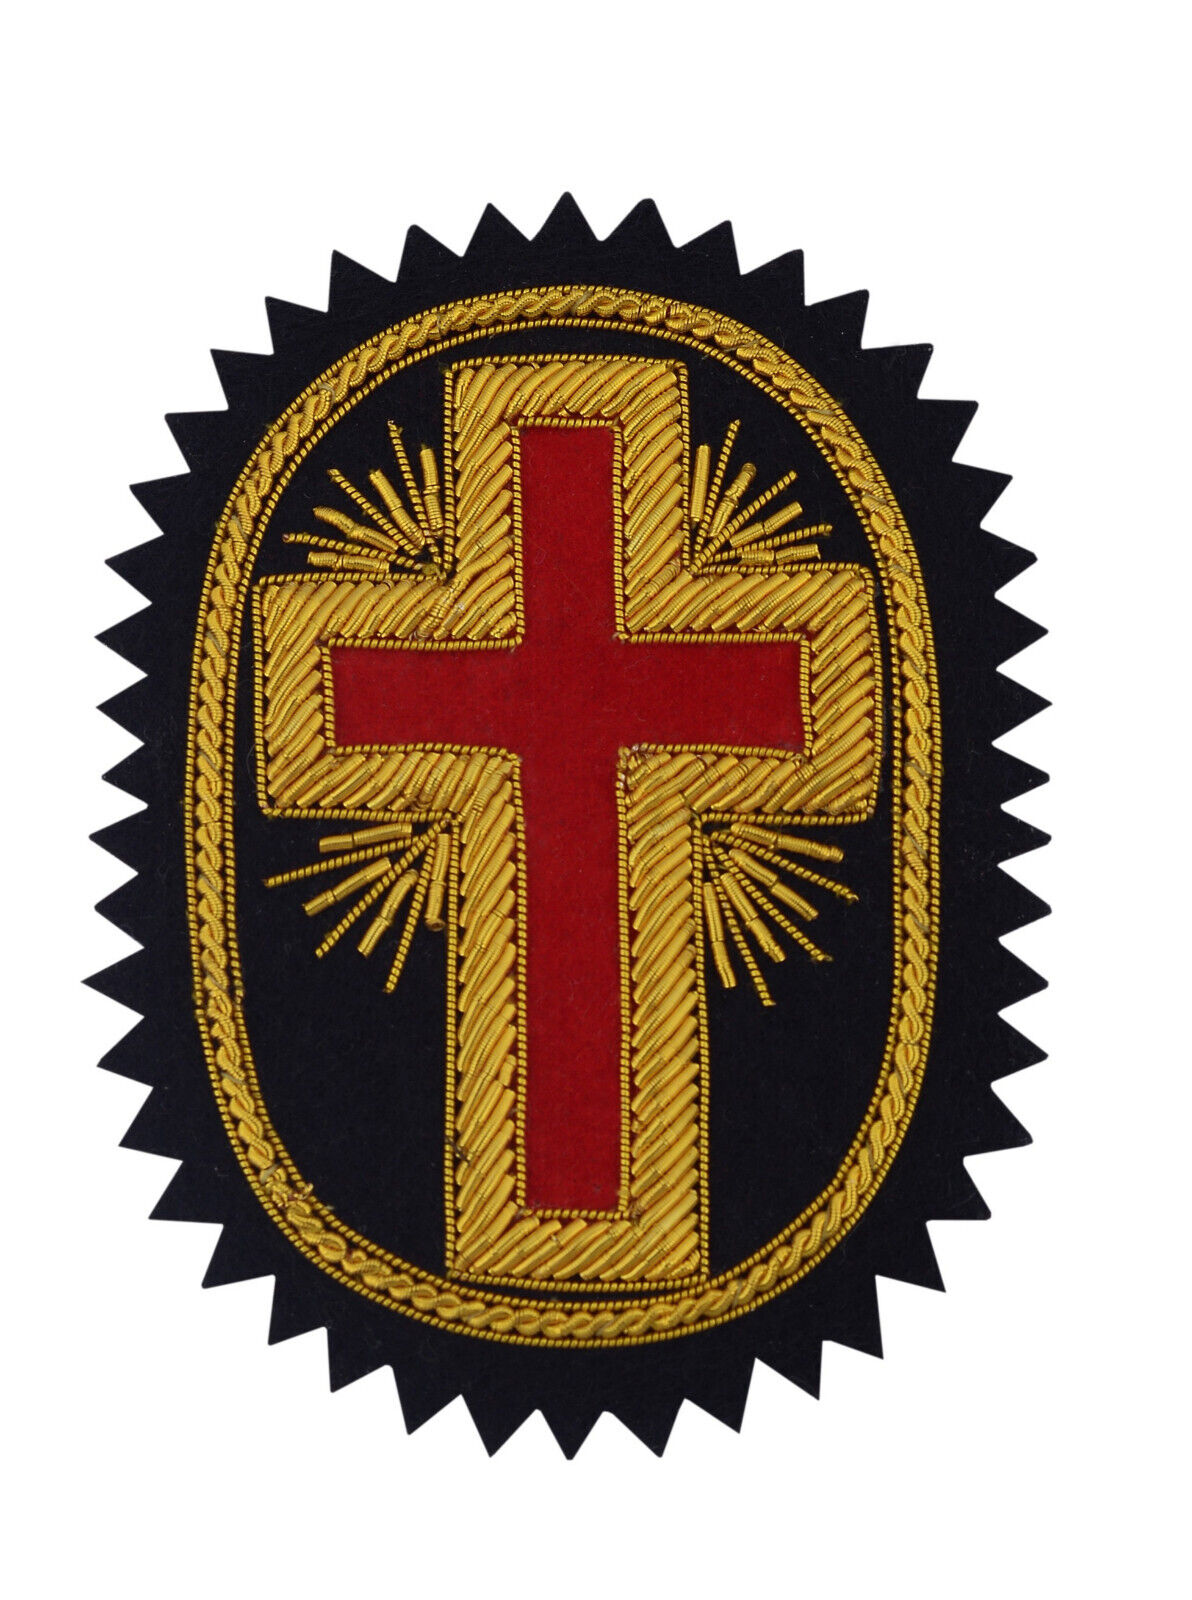 Masonic Knight Templar Passion Cross Rosette Hand Embroidered